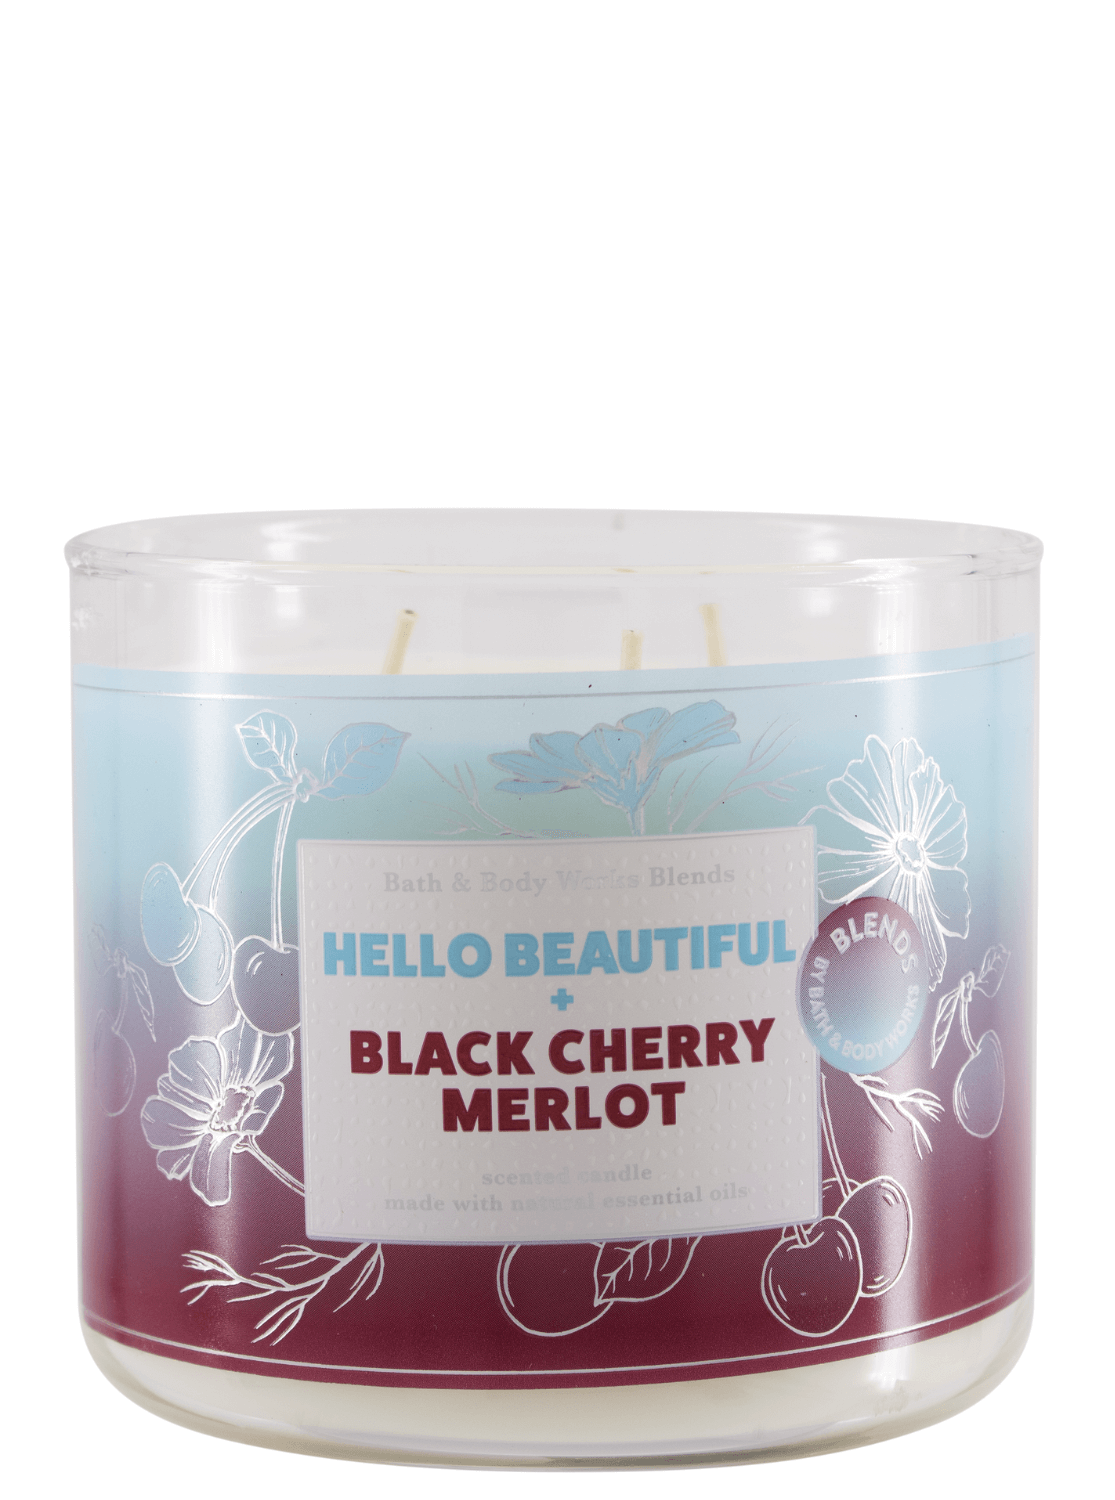 Zweite Wahl - 3-Docht Kerze - Hello Beautiful + Black Cherry Merlot - 411g